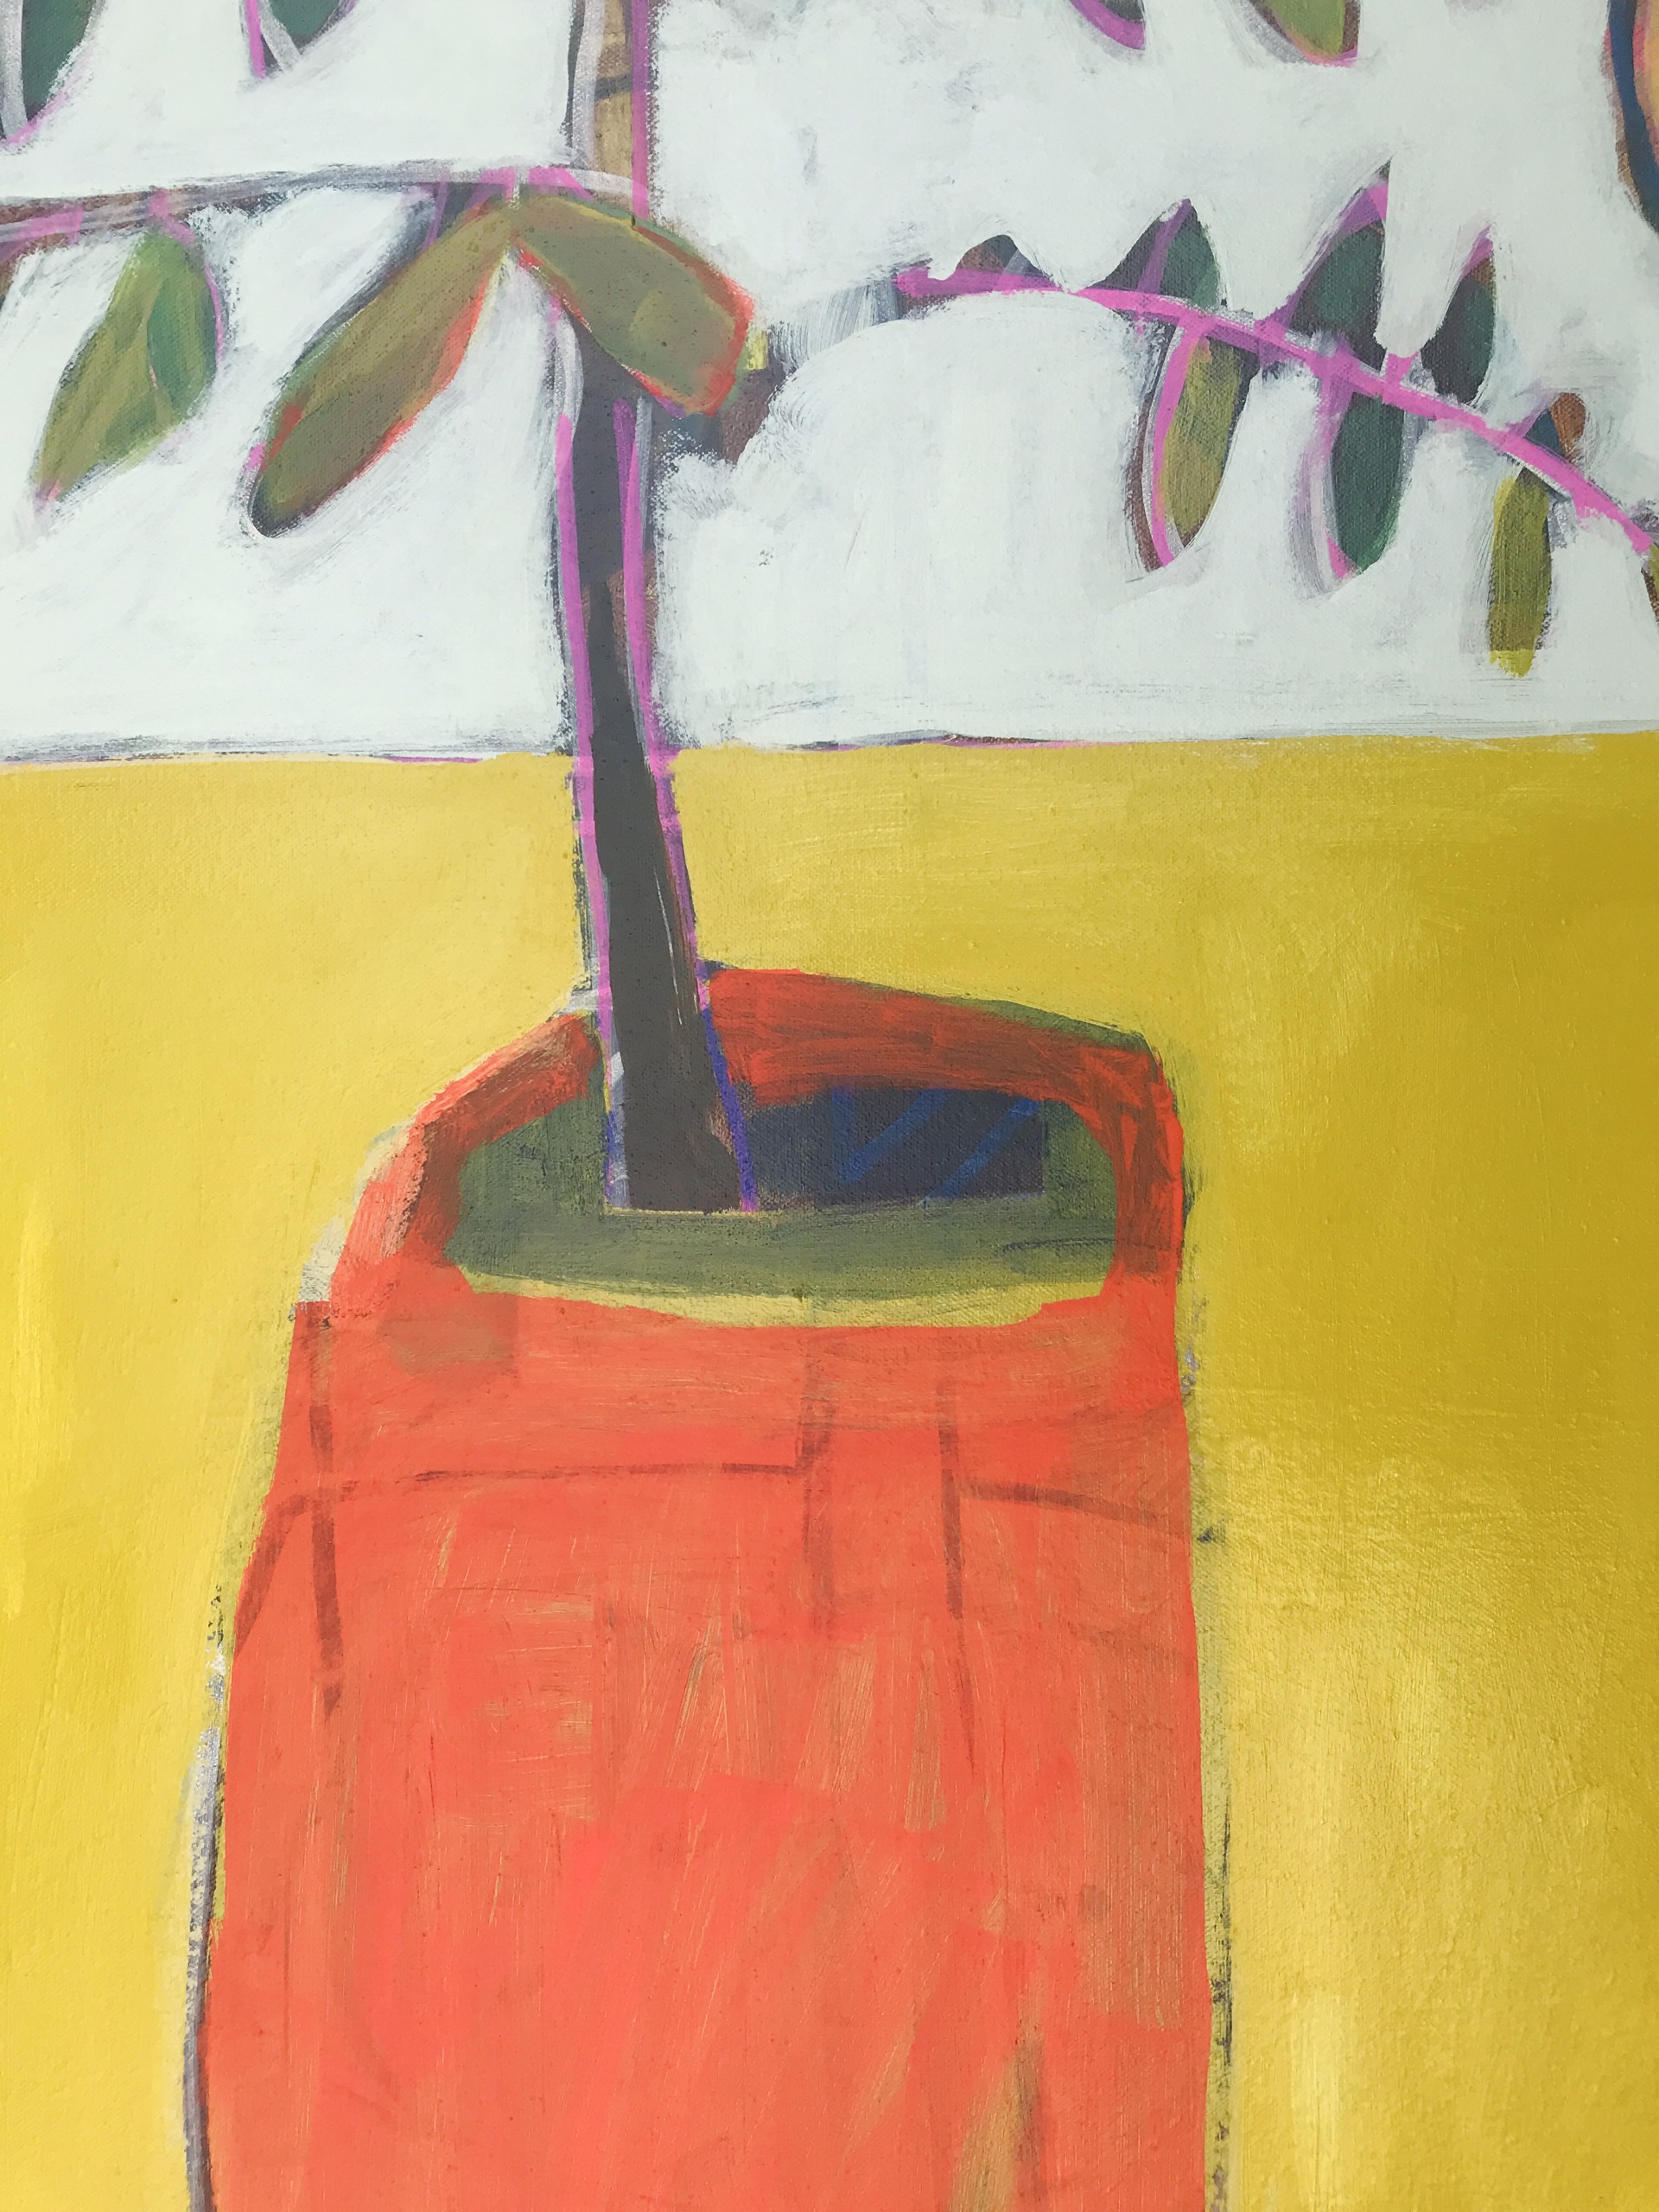 Lemon Tree in Red Pot by Rachael Van Dyke